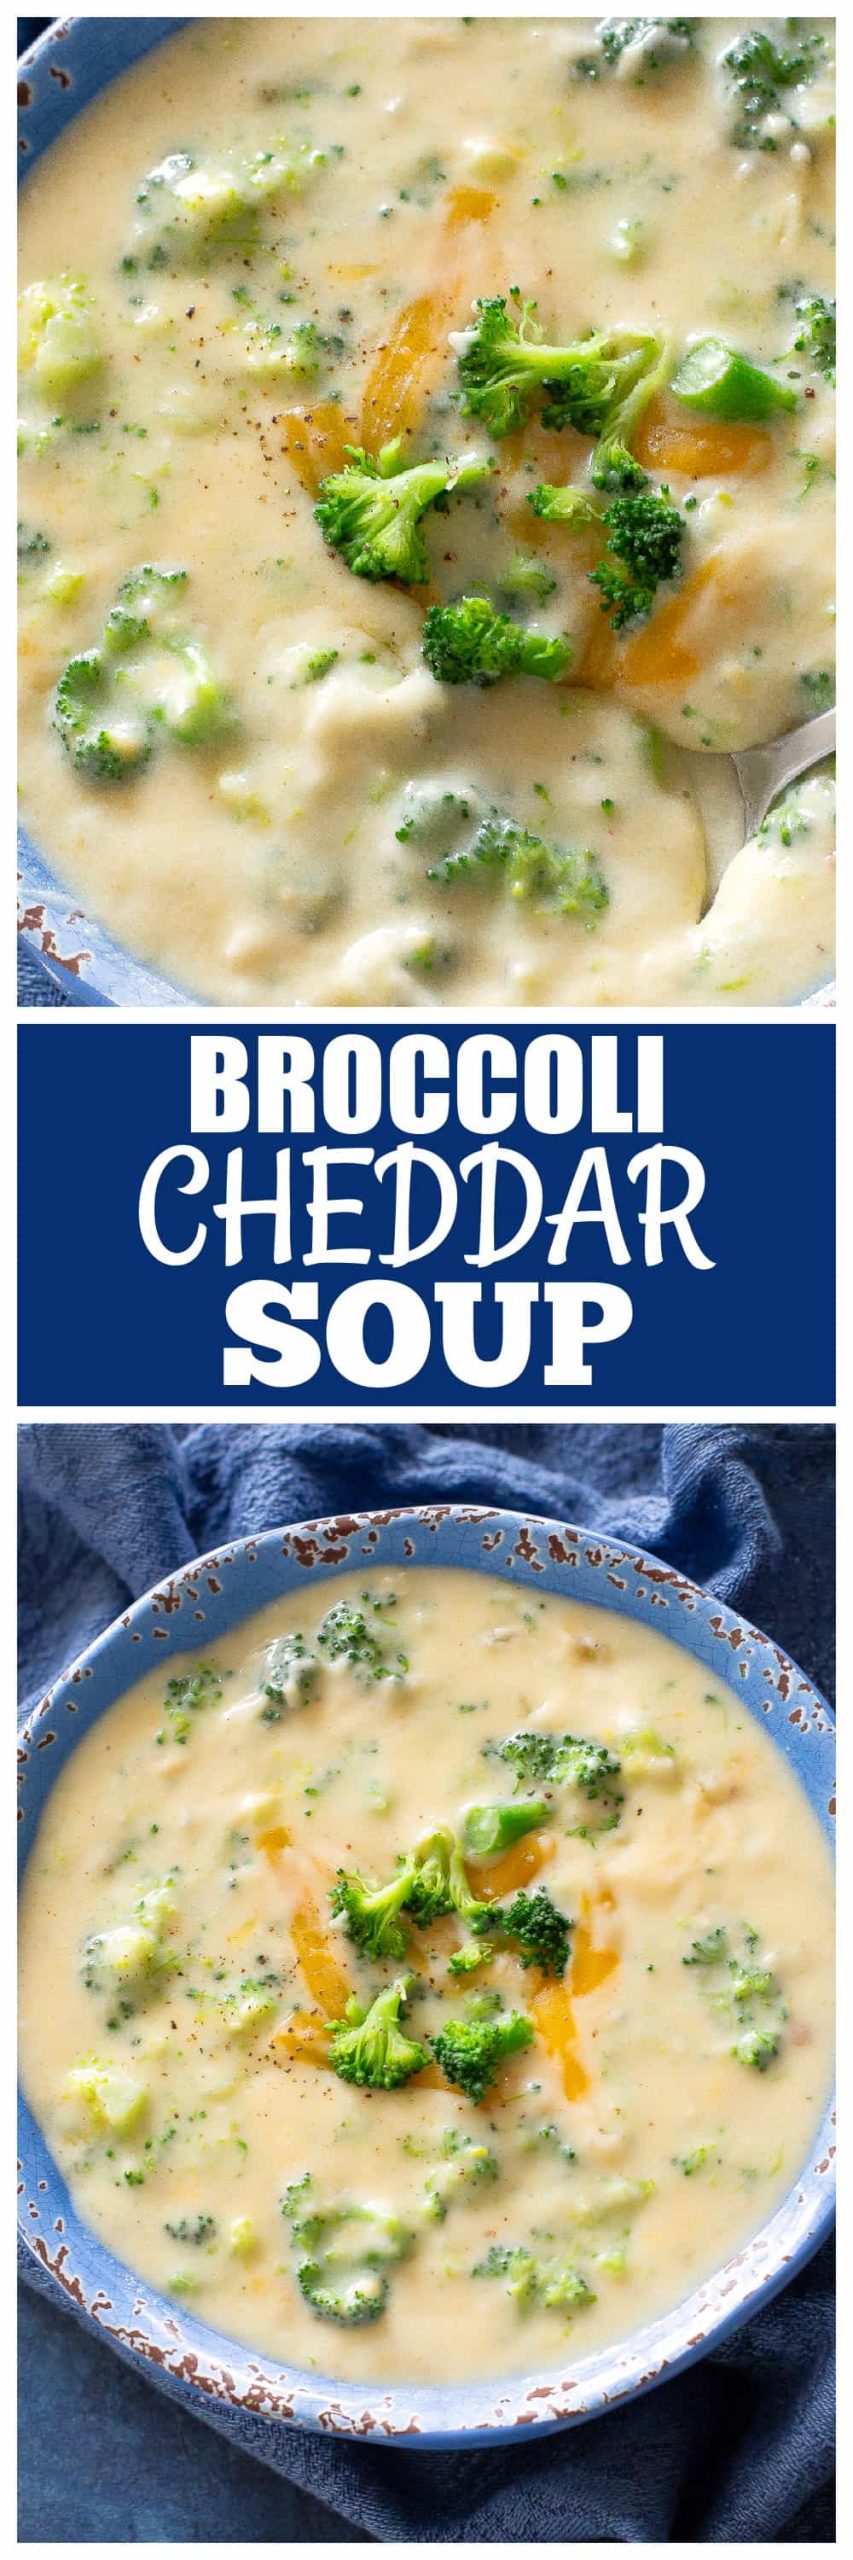 broccoli cheddar soup scaled - Broccoli Cheddar Soup